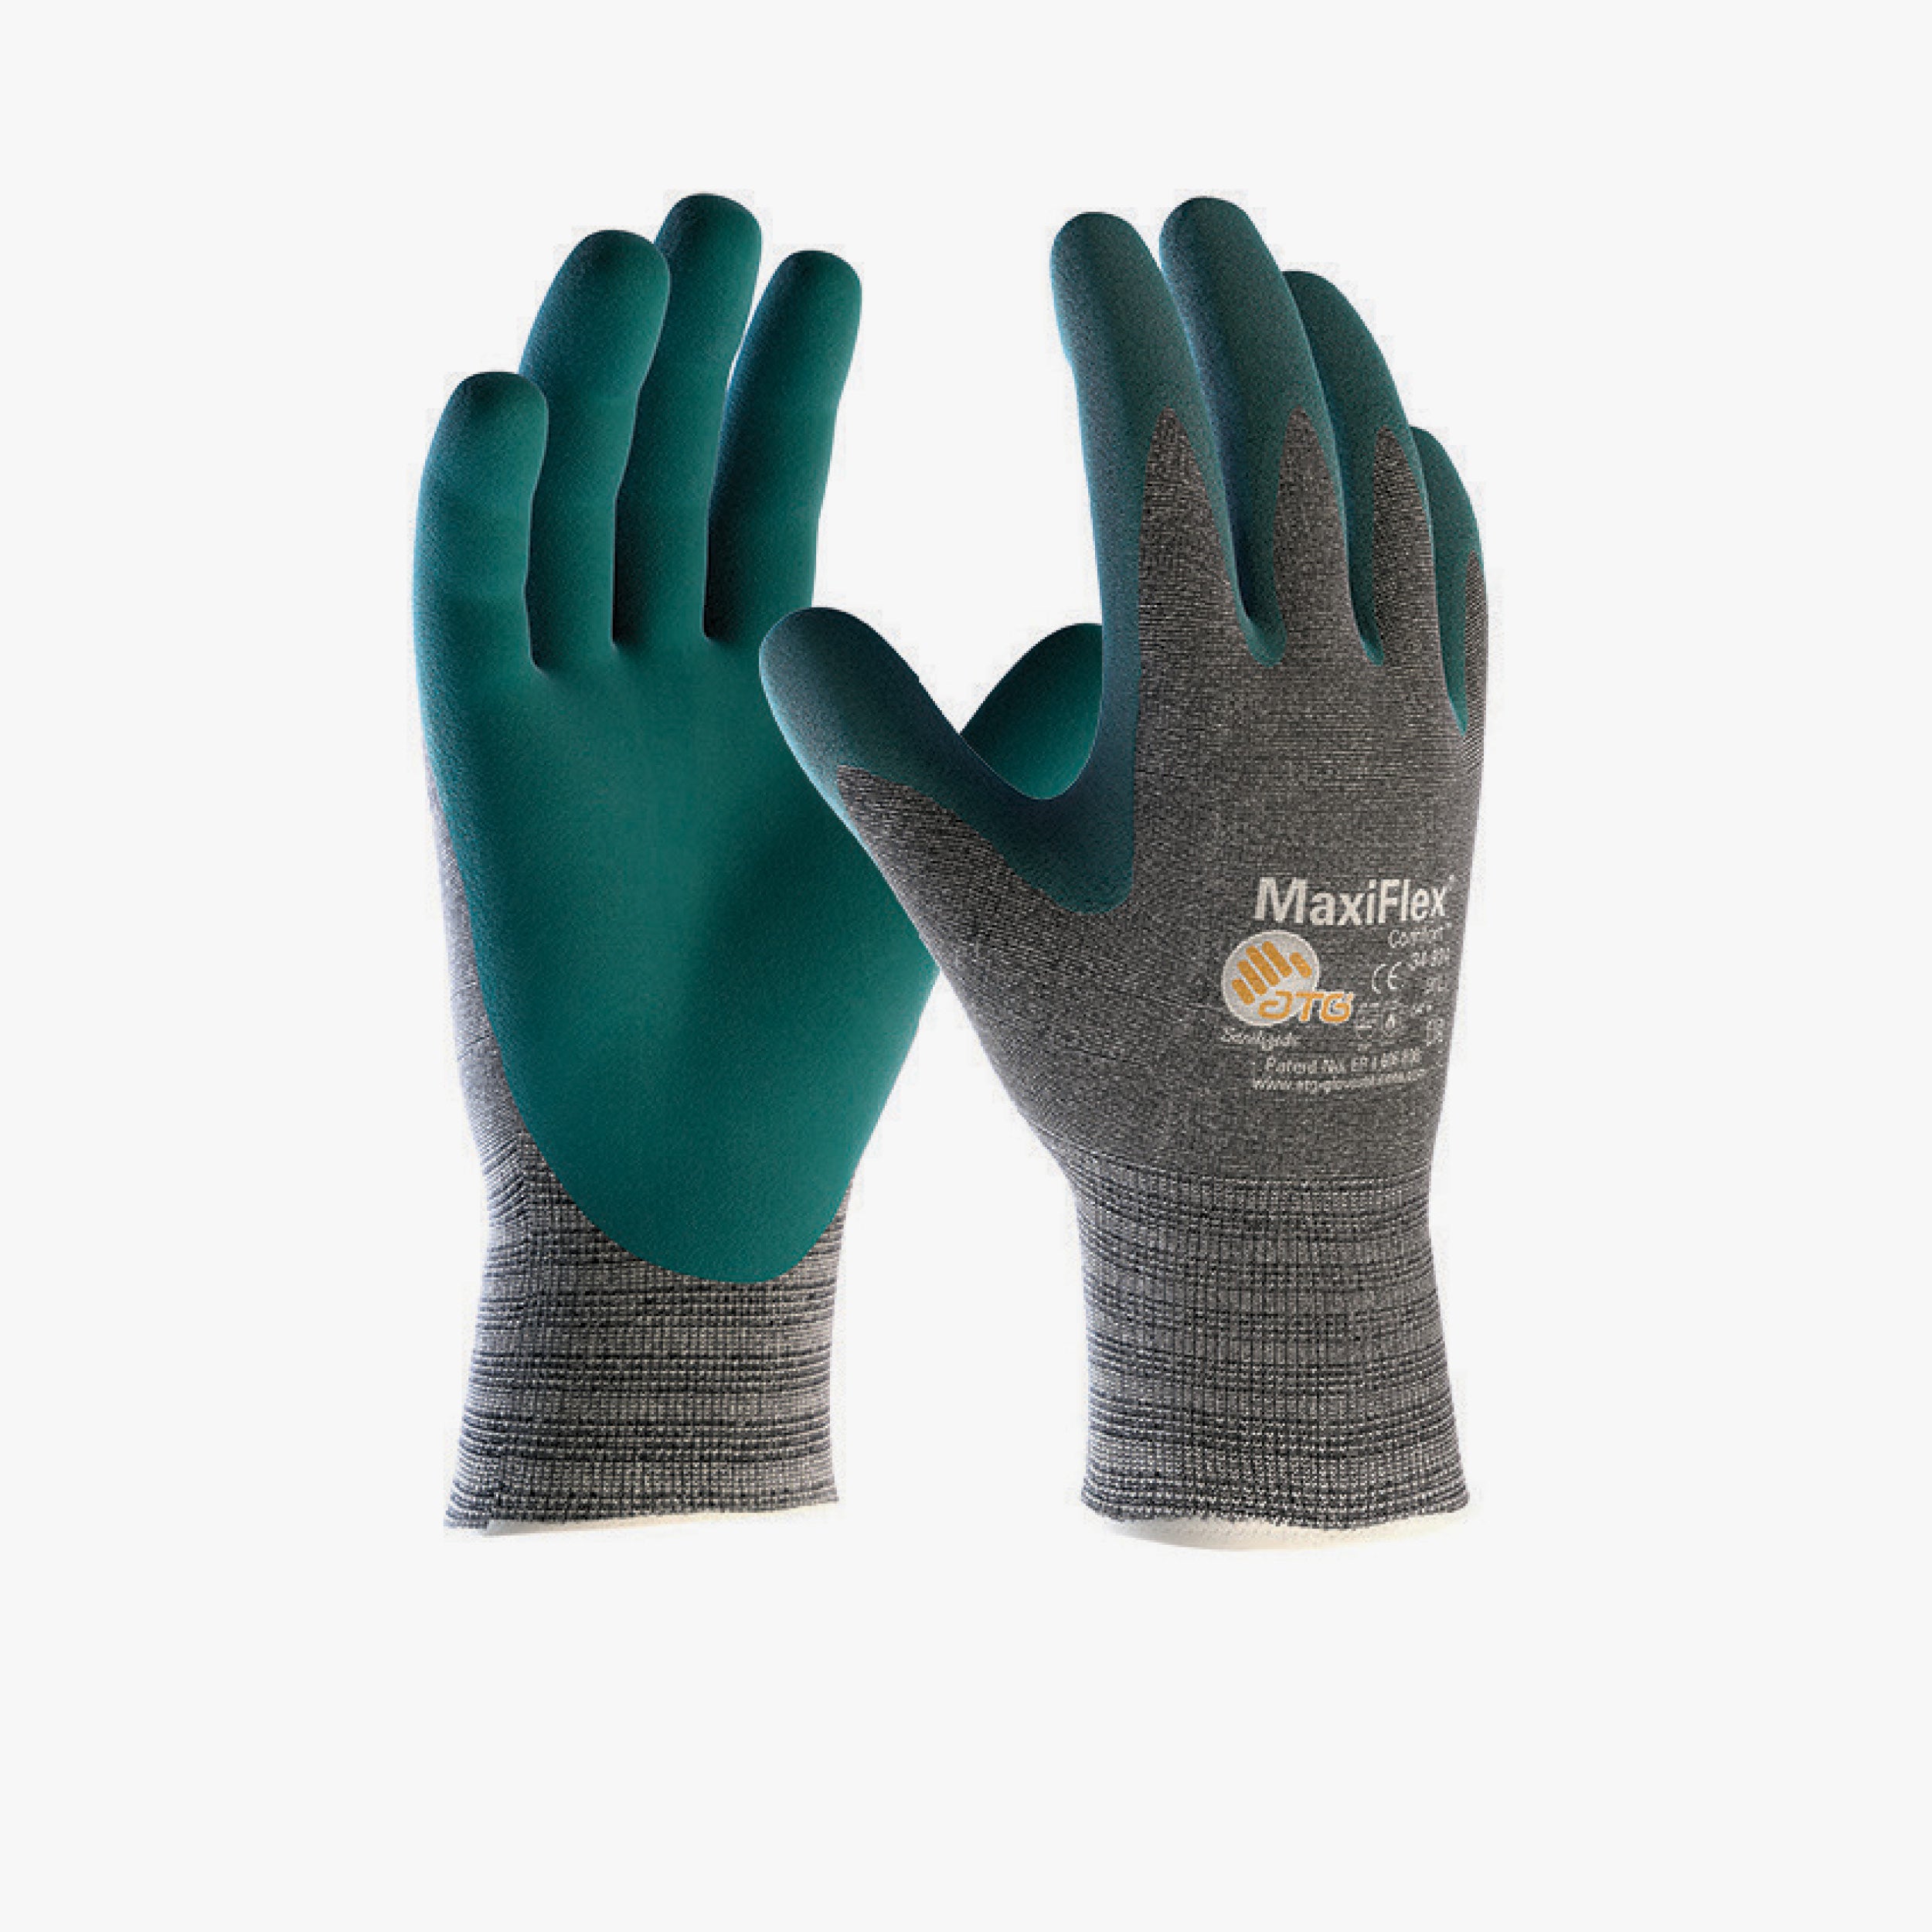 Gloves 34924 maxiflex comfort blue ventilated 10 - 1pcs.